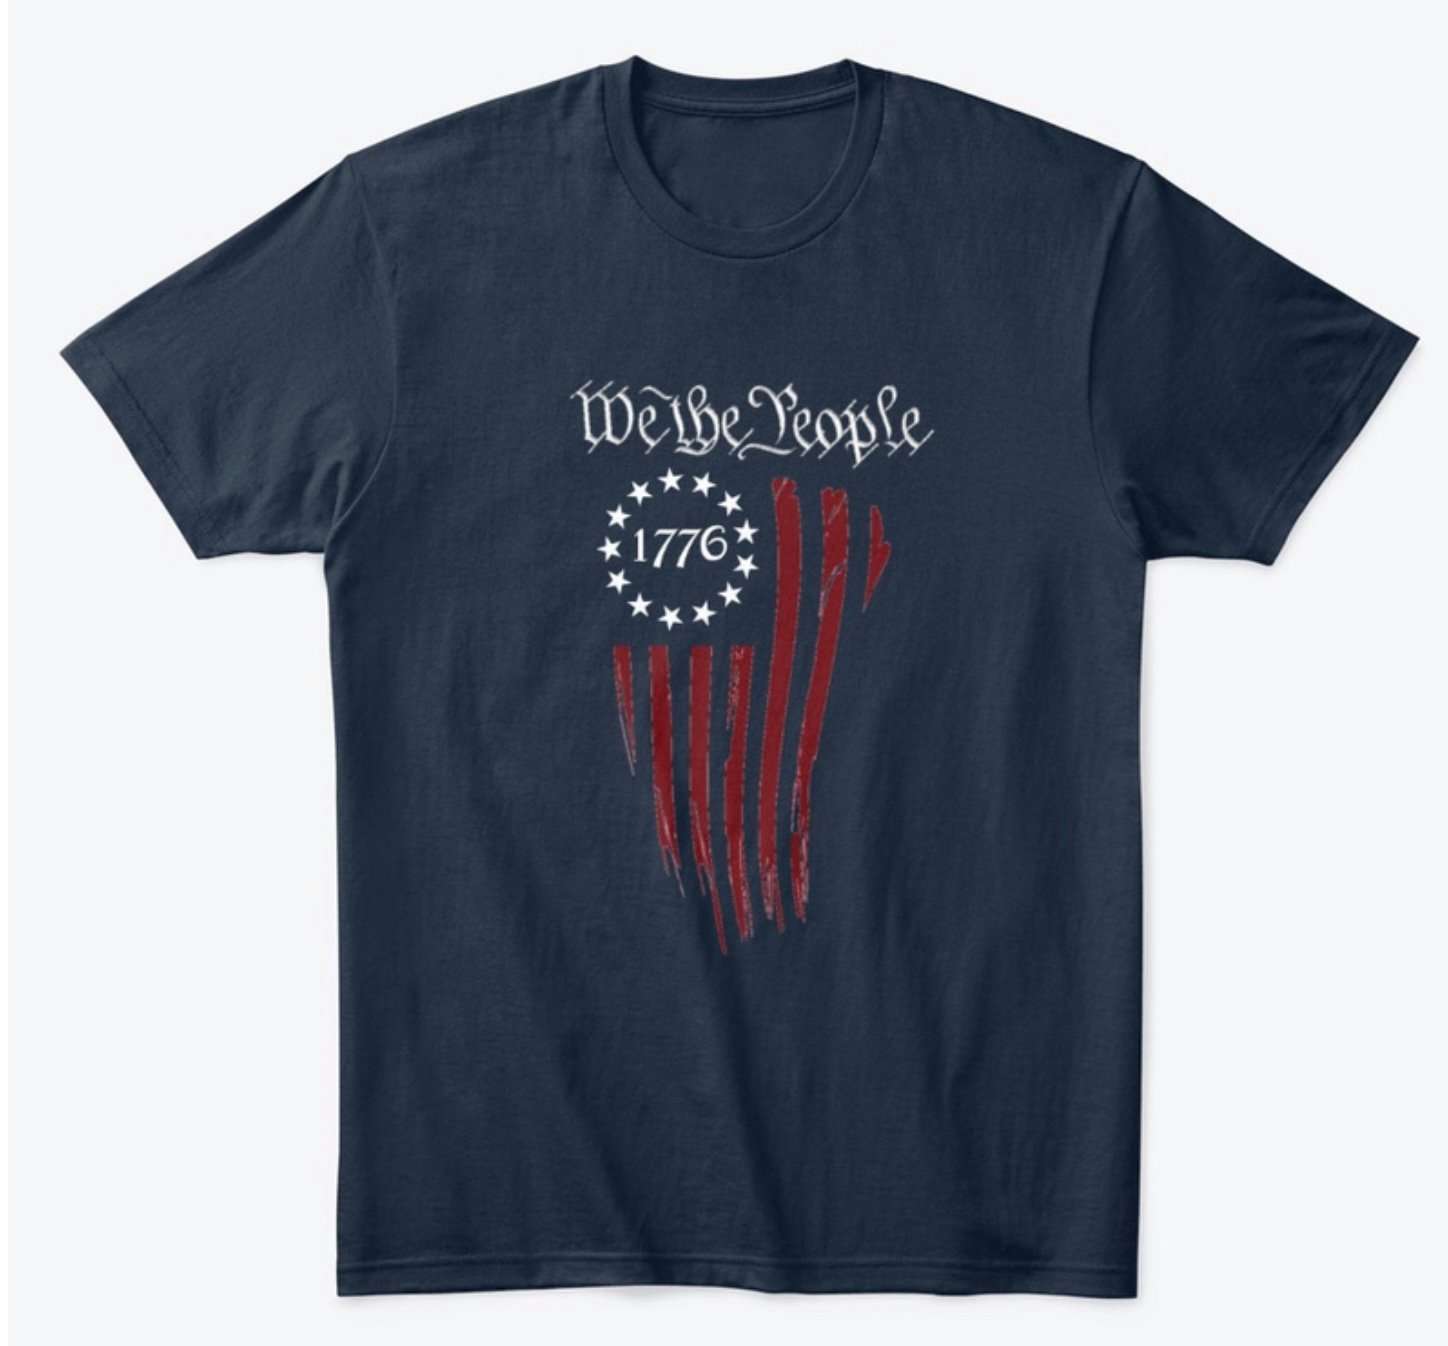 We the people - America people, America flag 1776